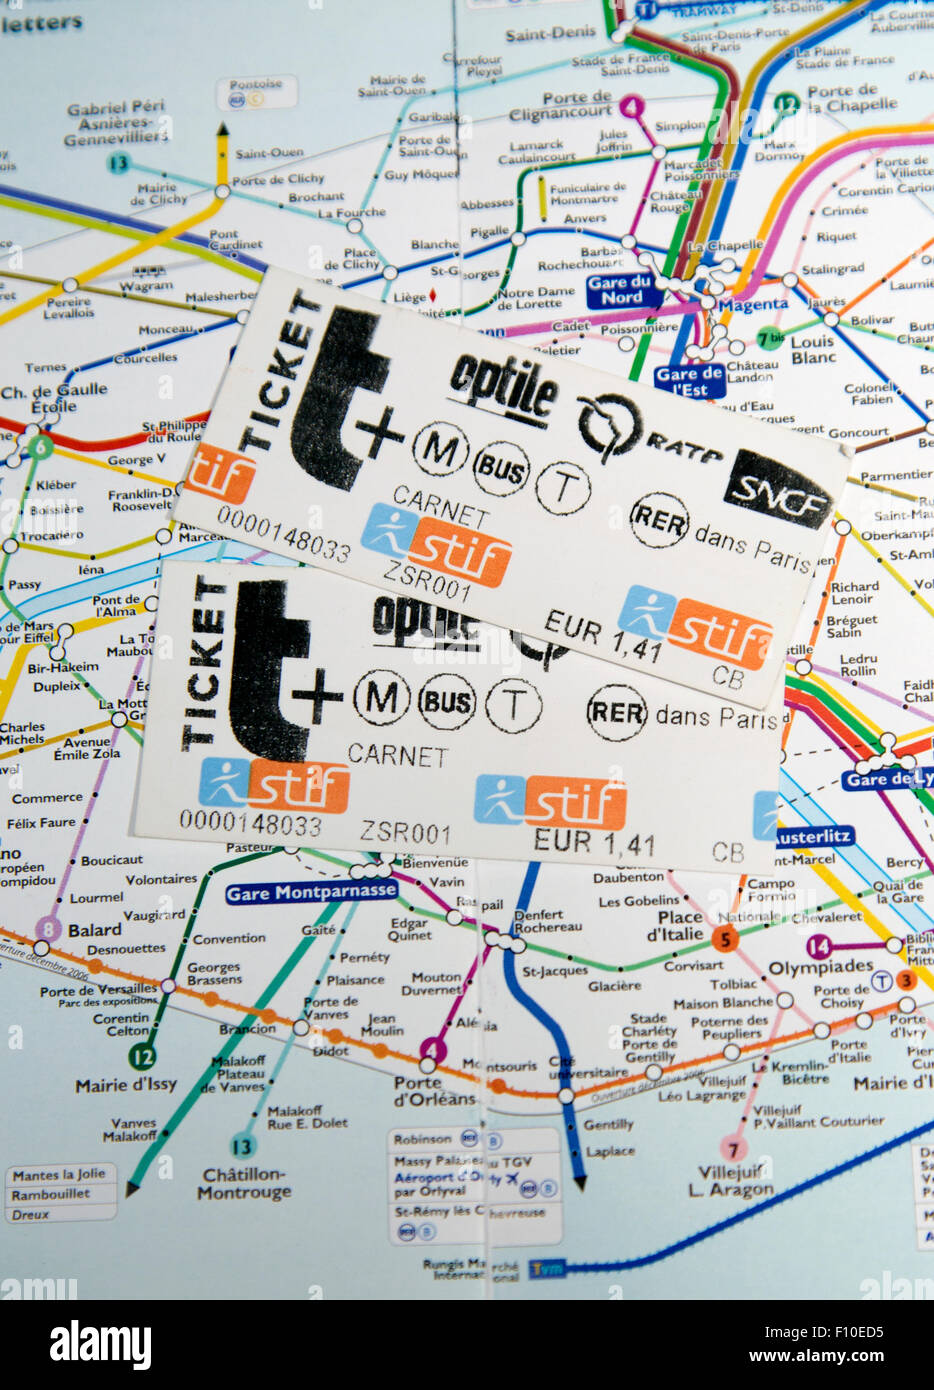 Paris Metro tickets and map Stock Photo